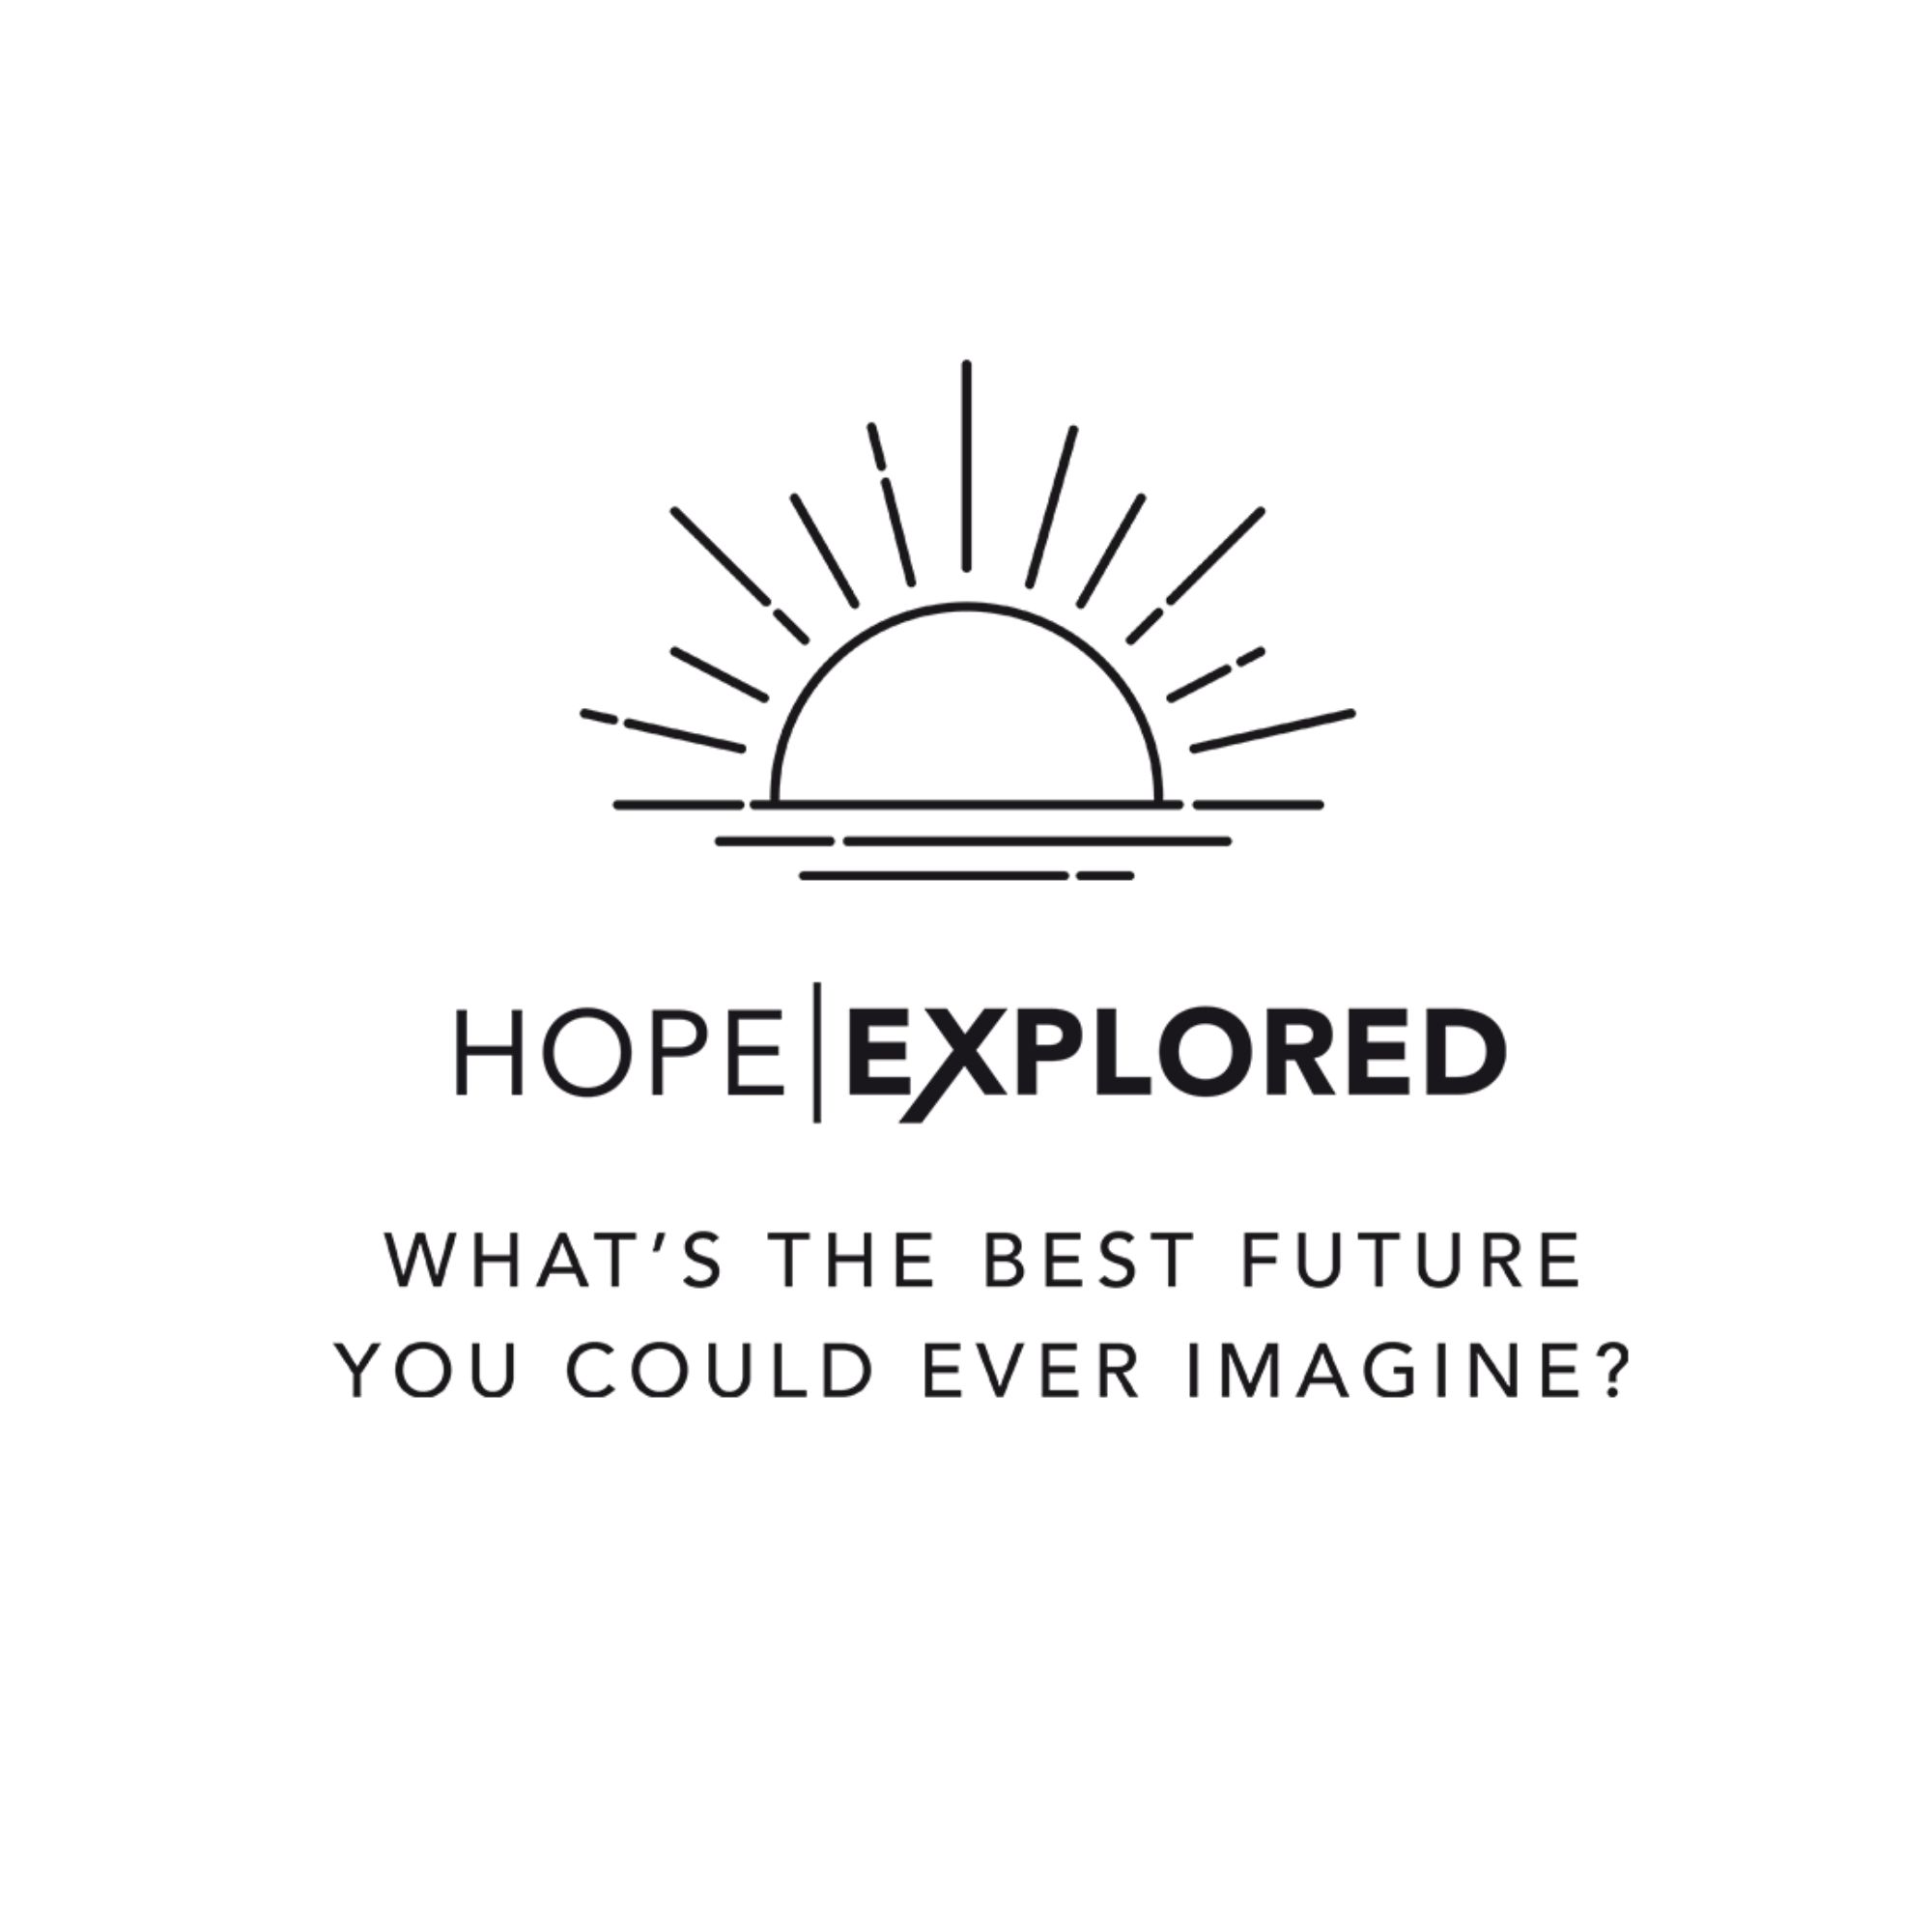  Hope Explored logo